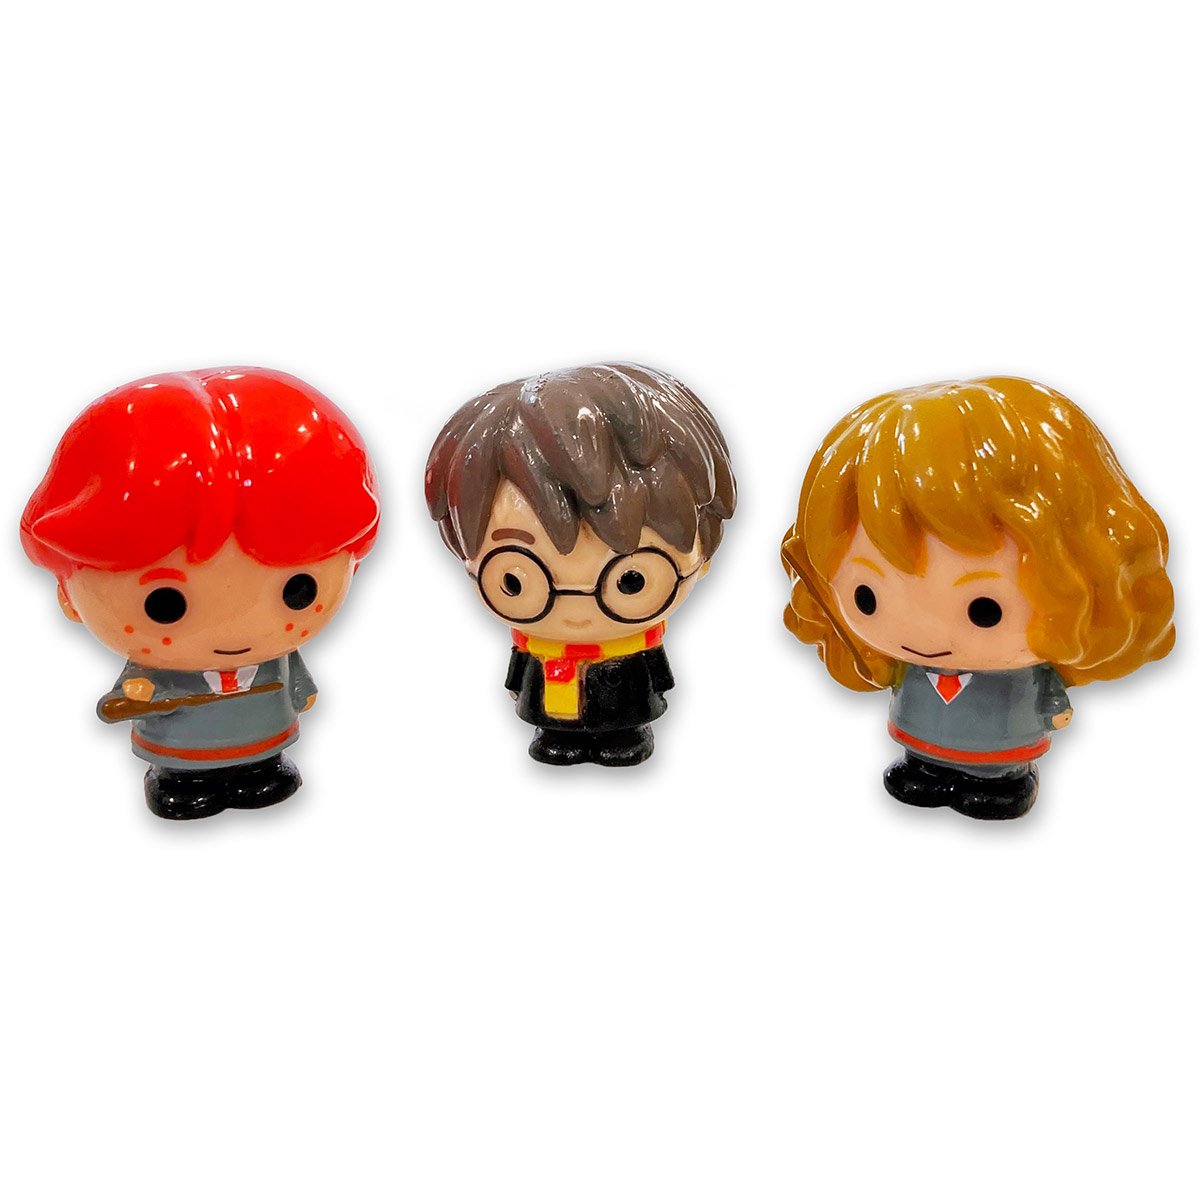 Mini Figurine Harry Potter